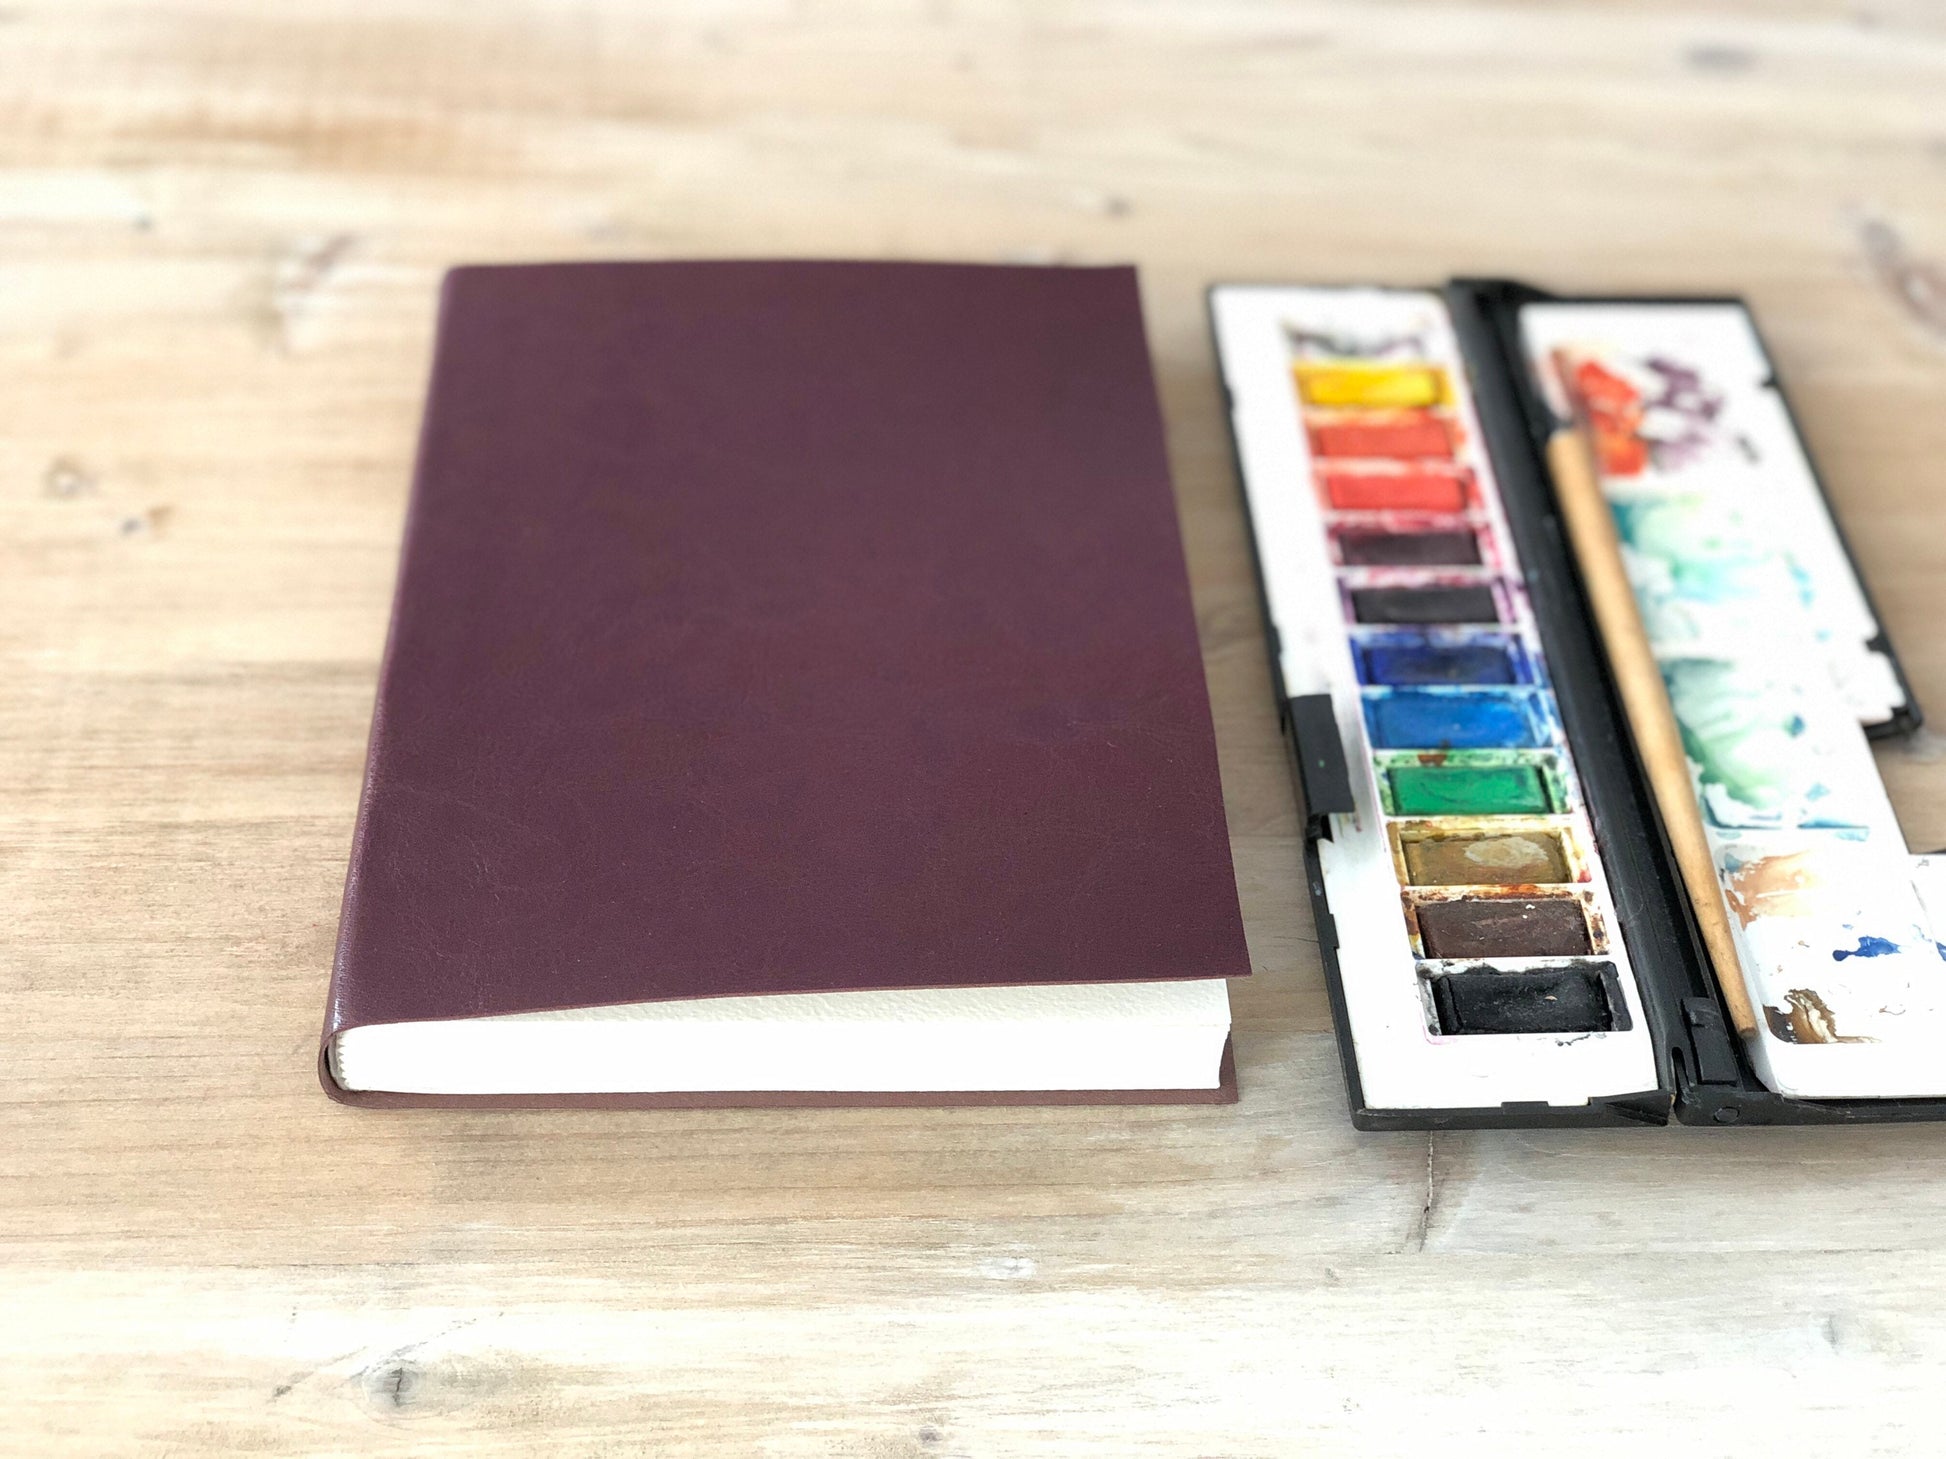 Large Arches Cotton Watercolor Sketchbook Pl Leather Journal, Artist b –